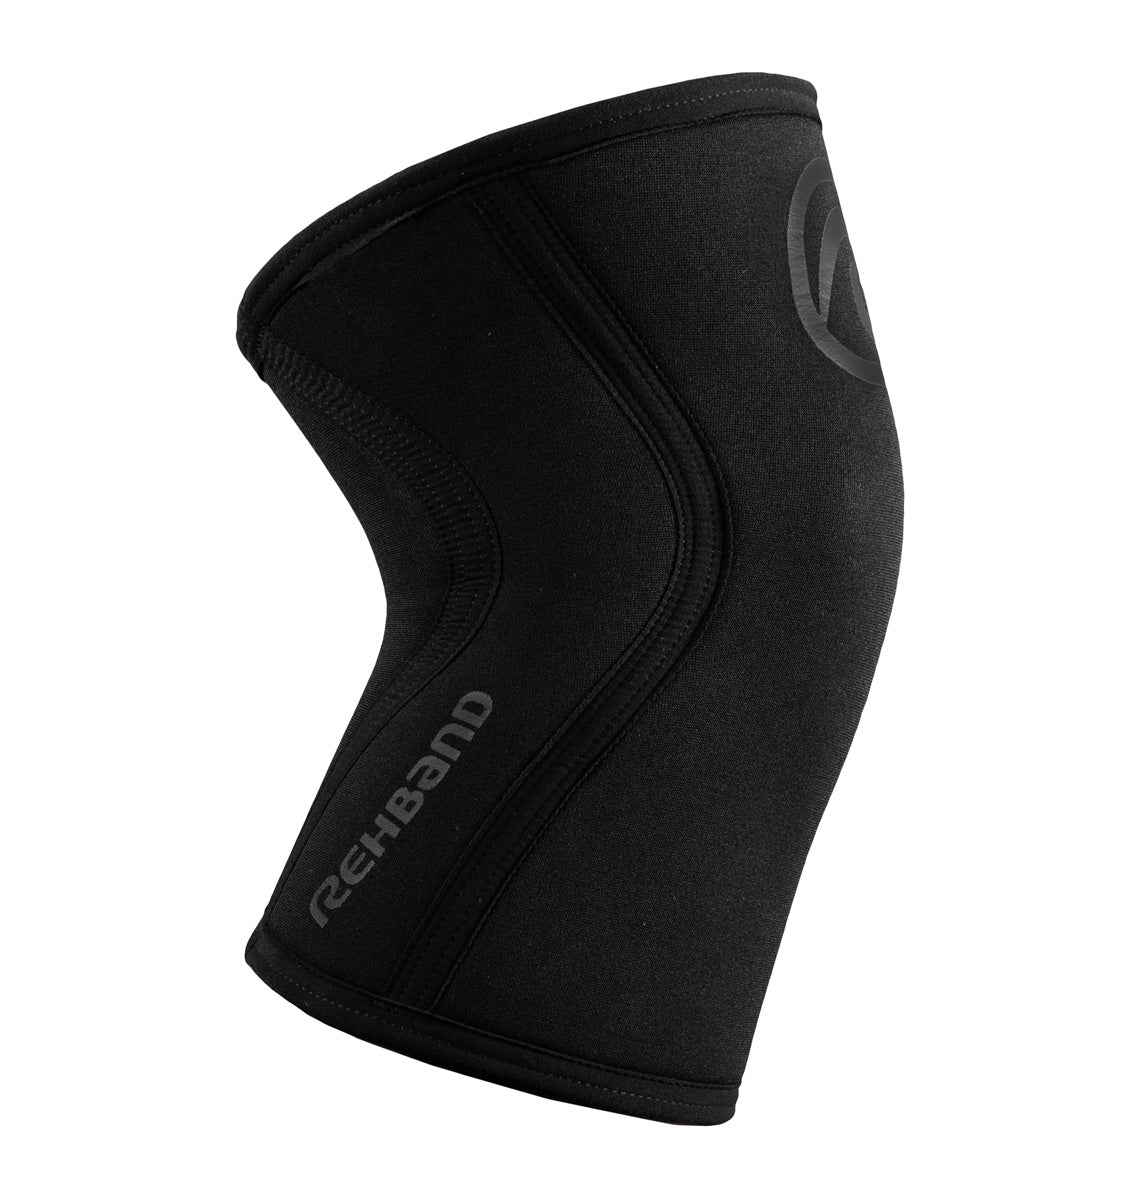 105466-01 Rehband Rx Knee Sleeve Carbon Black 7mm - Side